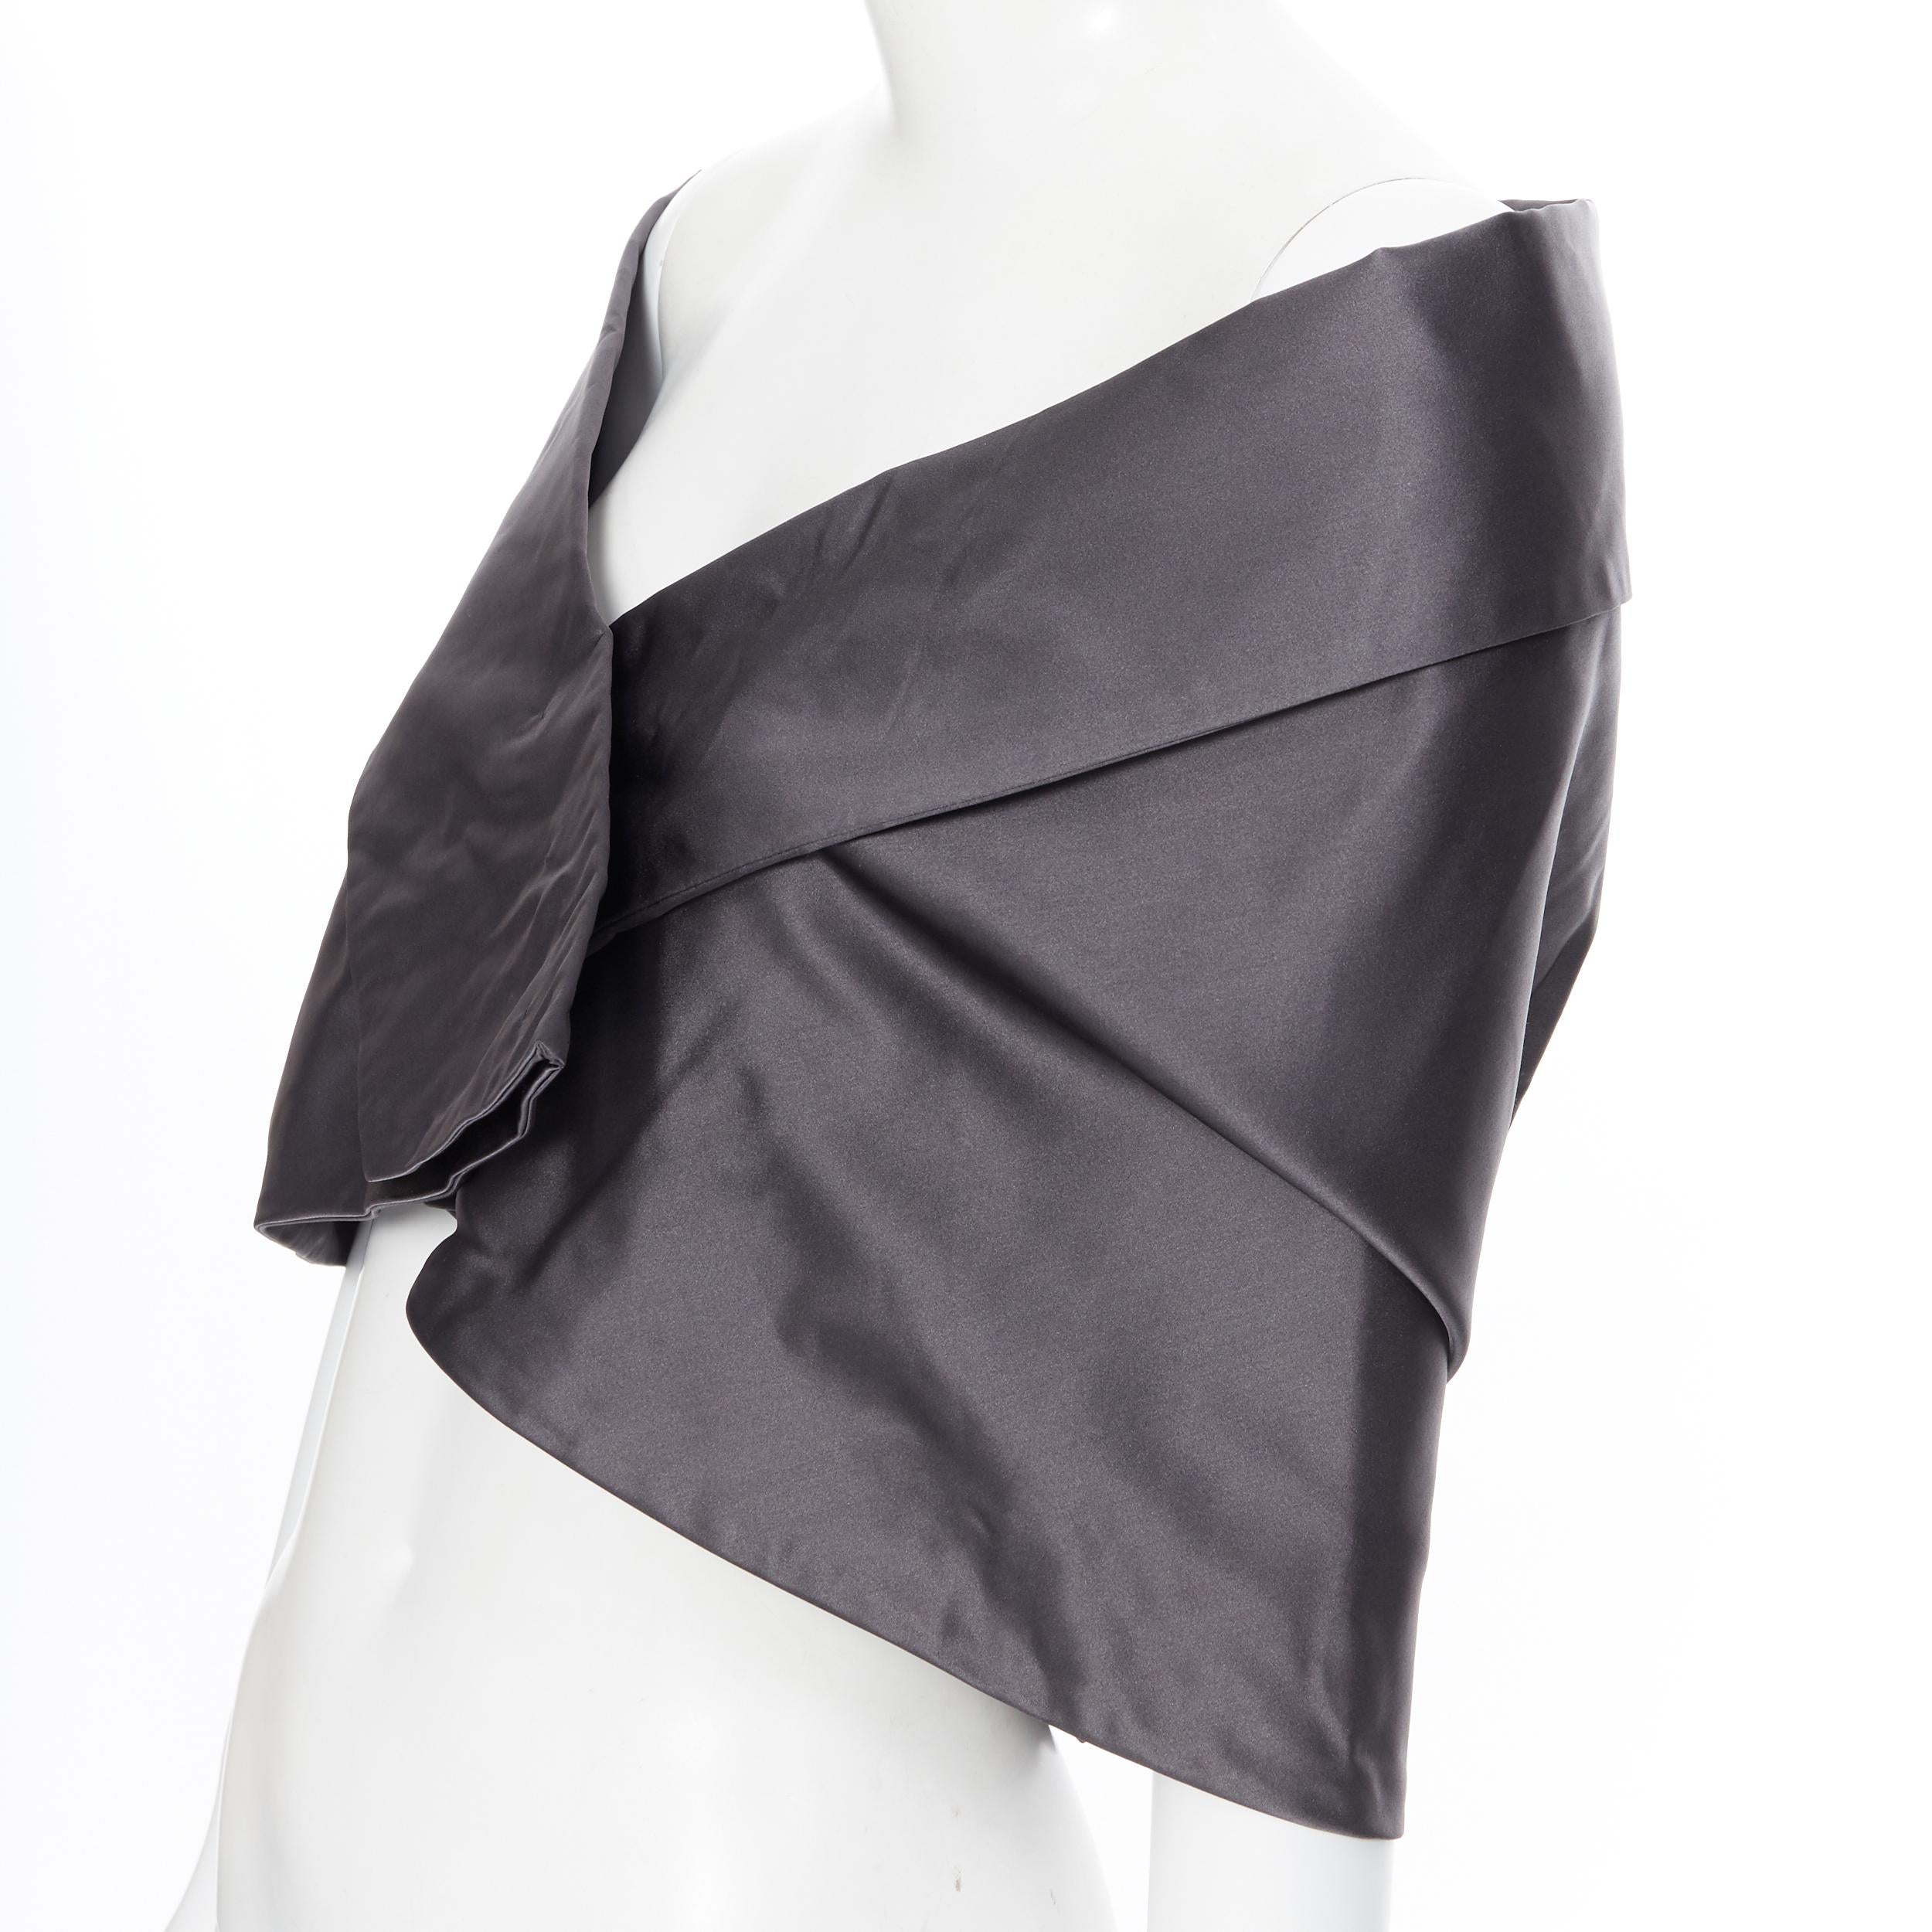 new PRADA 100% silk dark grey kimono collar off shoulder shawl cape
Brand: Prada
Designer: Miuccia Prada
Model Name / Style: Kimono capelet
Material: Silk
Color: Grey
Pattern: Solid
Closure: Button
Extra Detail: Concealed snap button front